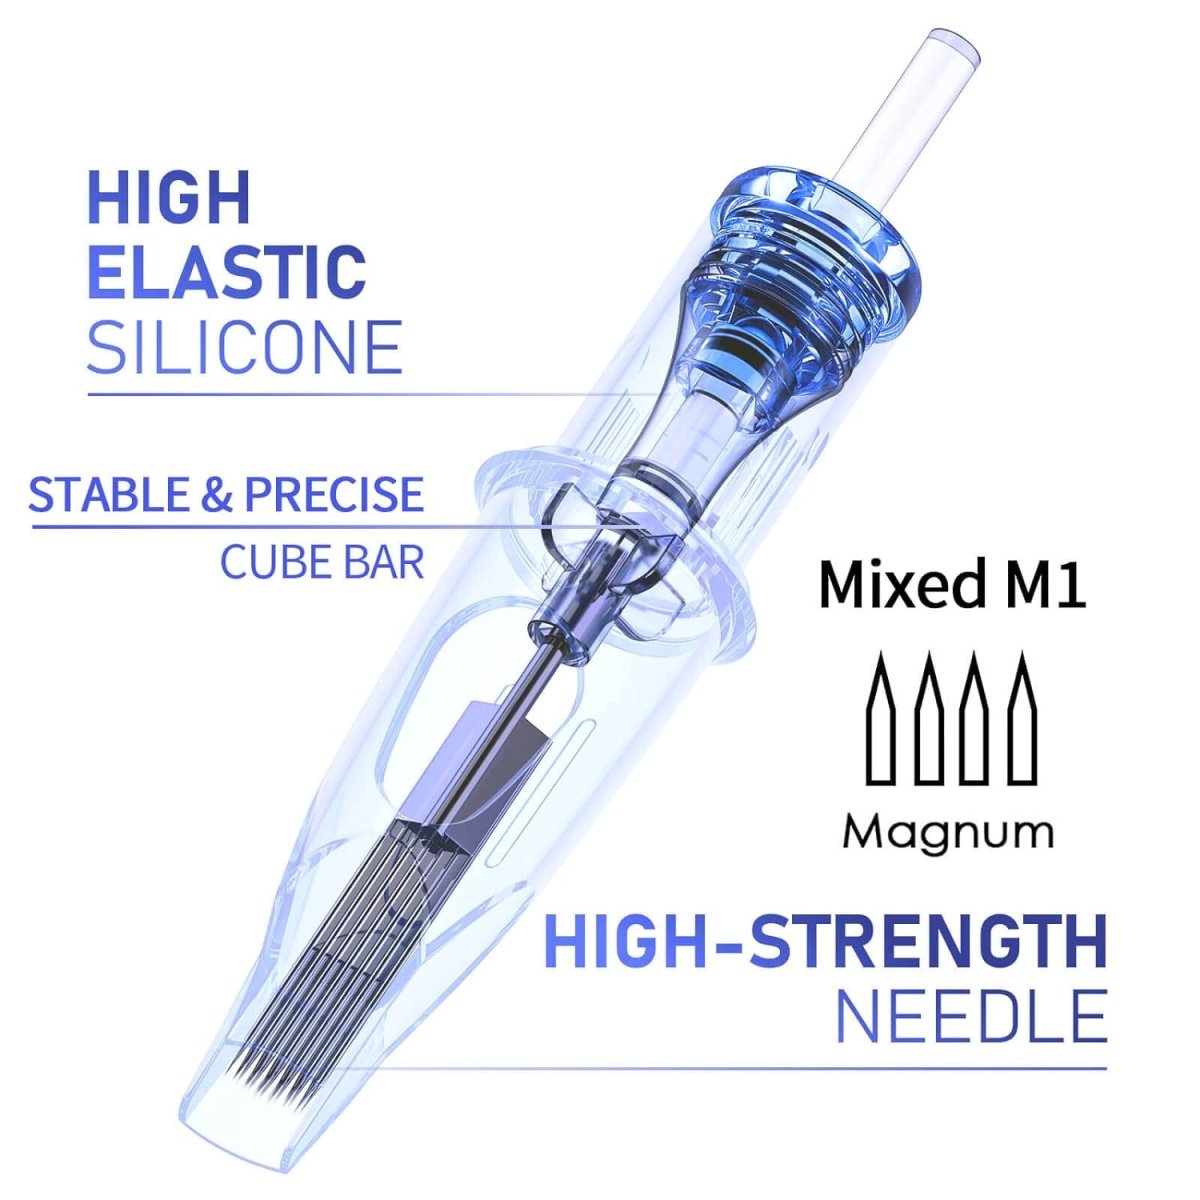 A-minusone Mixed Tattoo Needle Cartridges Standard 3RL+5RL+5M1+7M1 - 20pcs